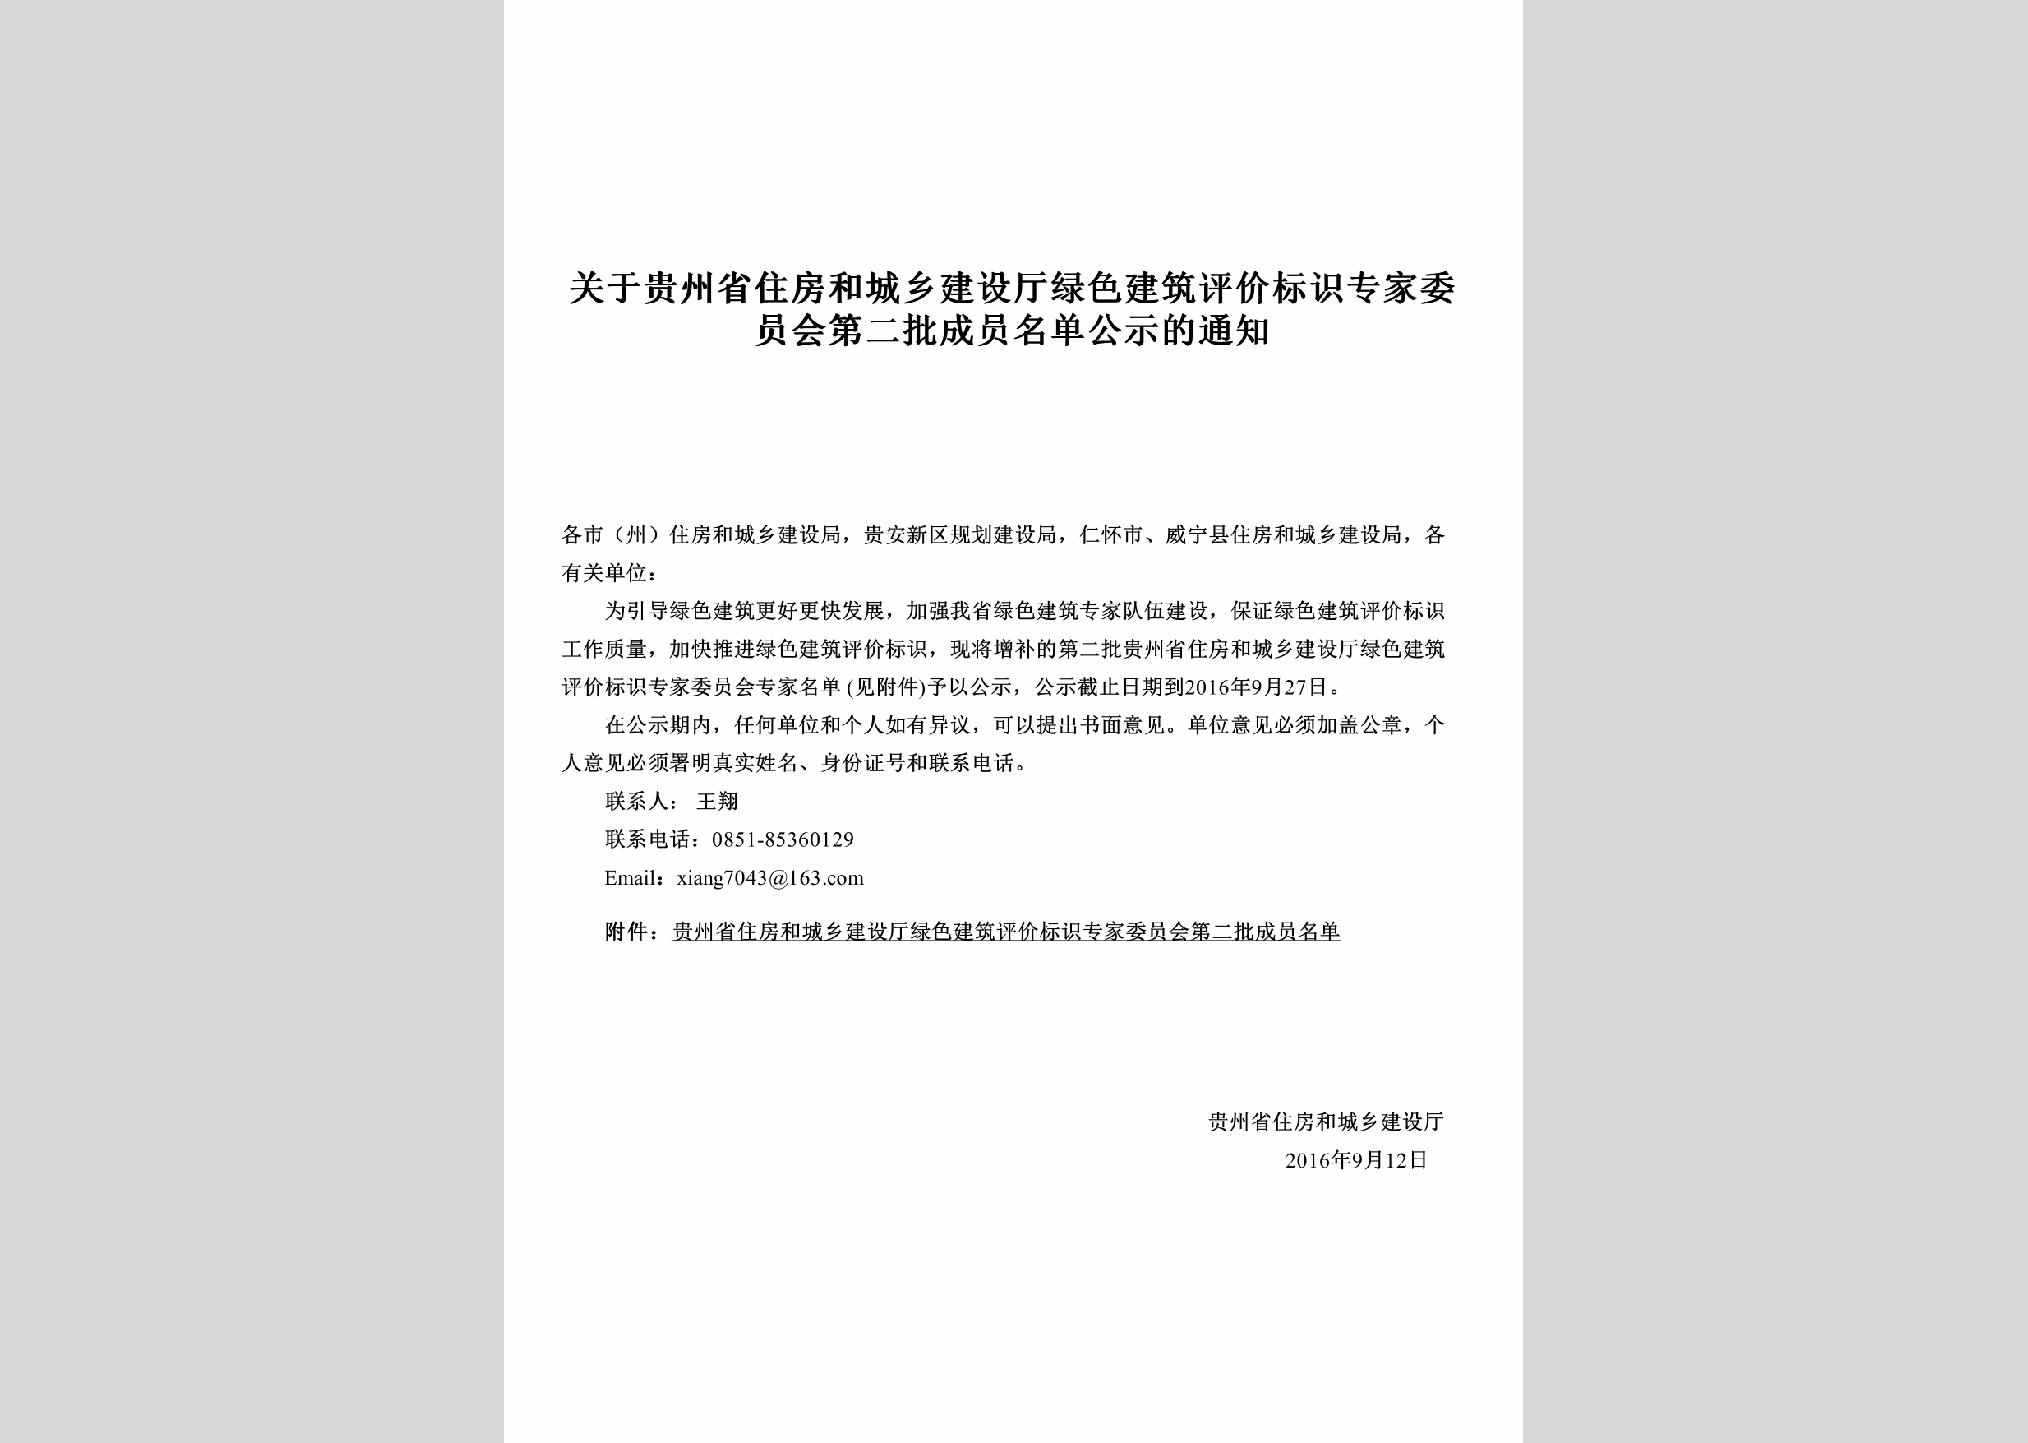 GZ-JZPJWYTZ-2016：关于贵州省住房和城乡建设厅绿色建筑评价标识专家委员会第二批成员名单公示的通知